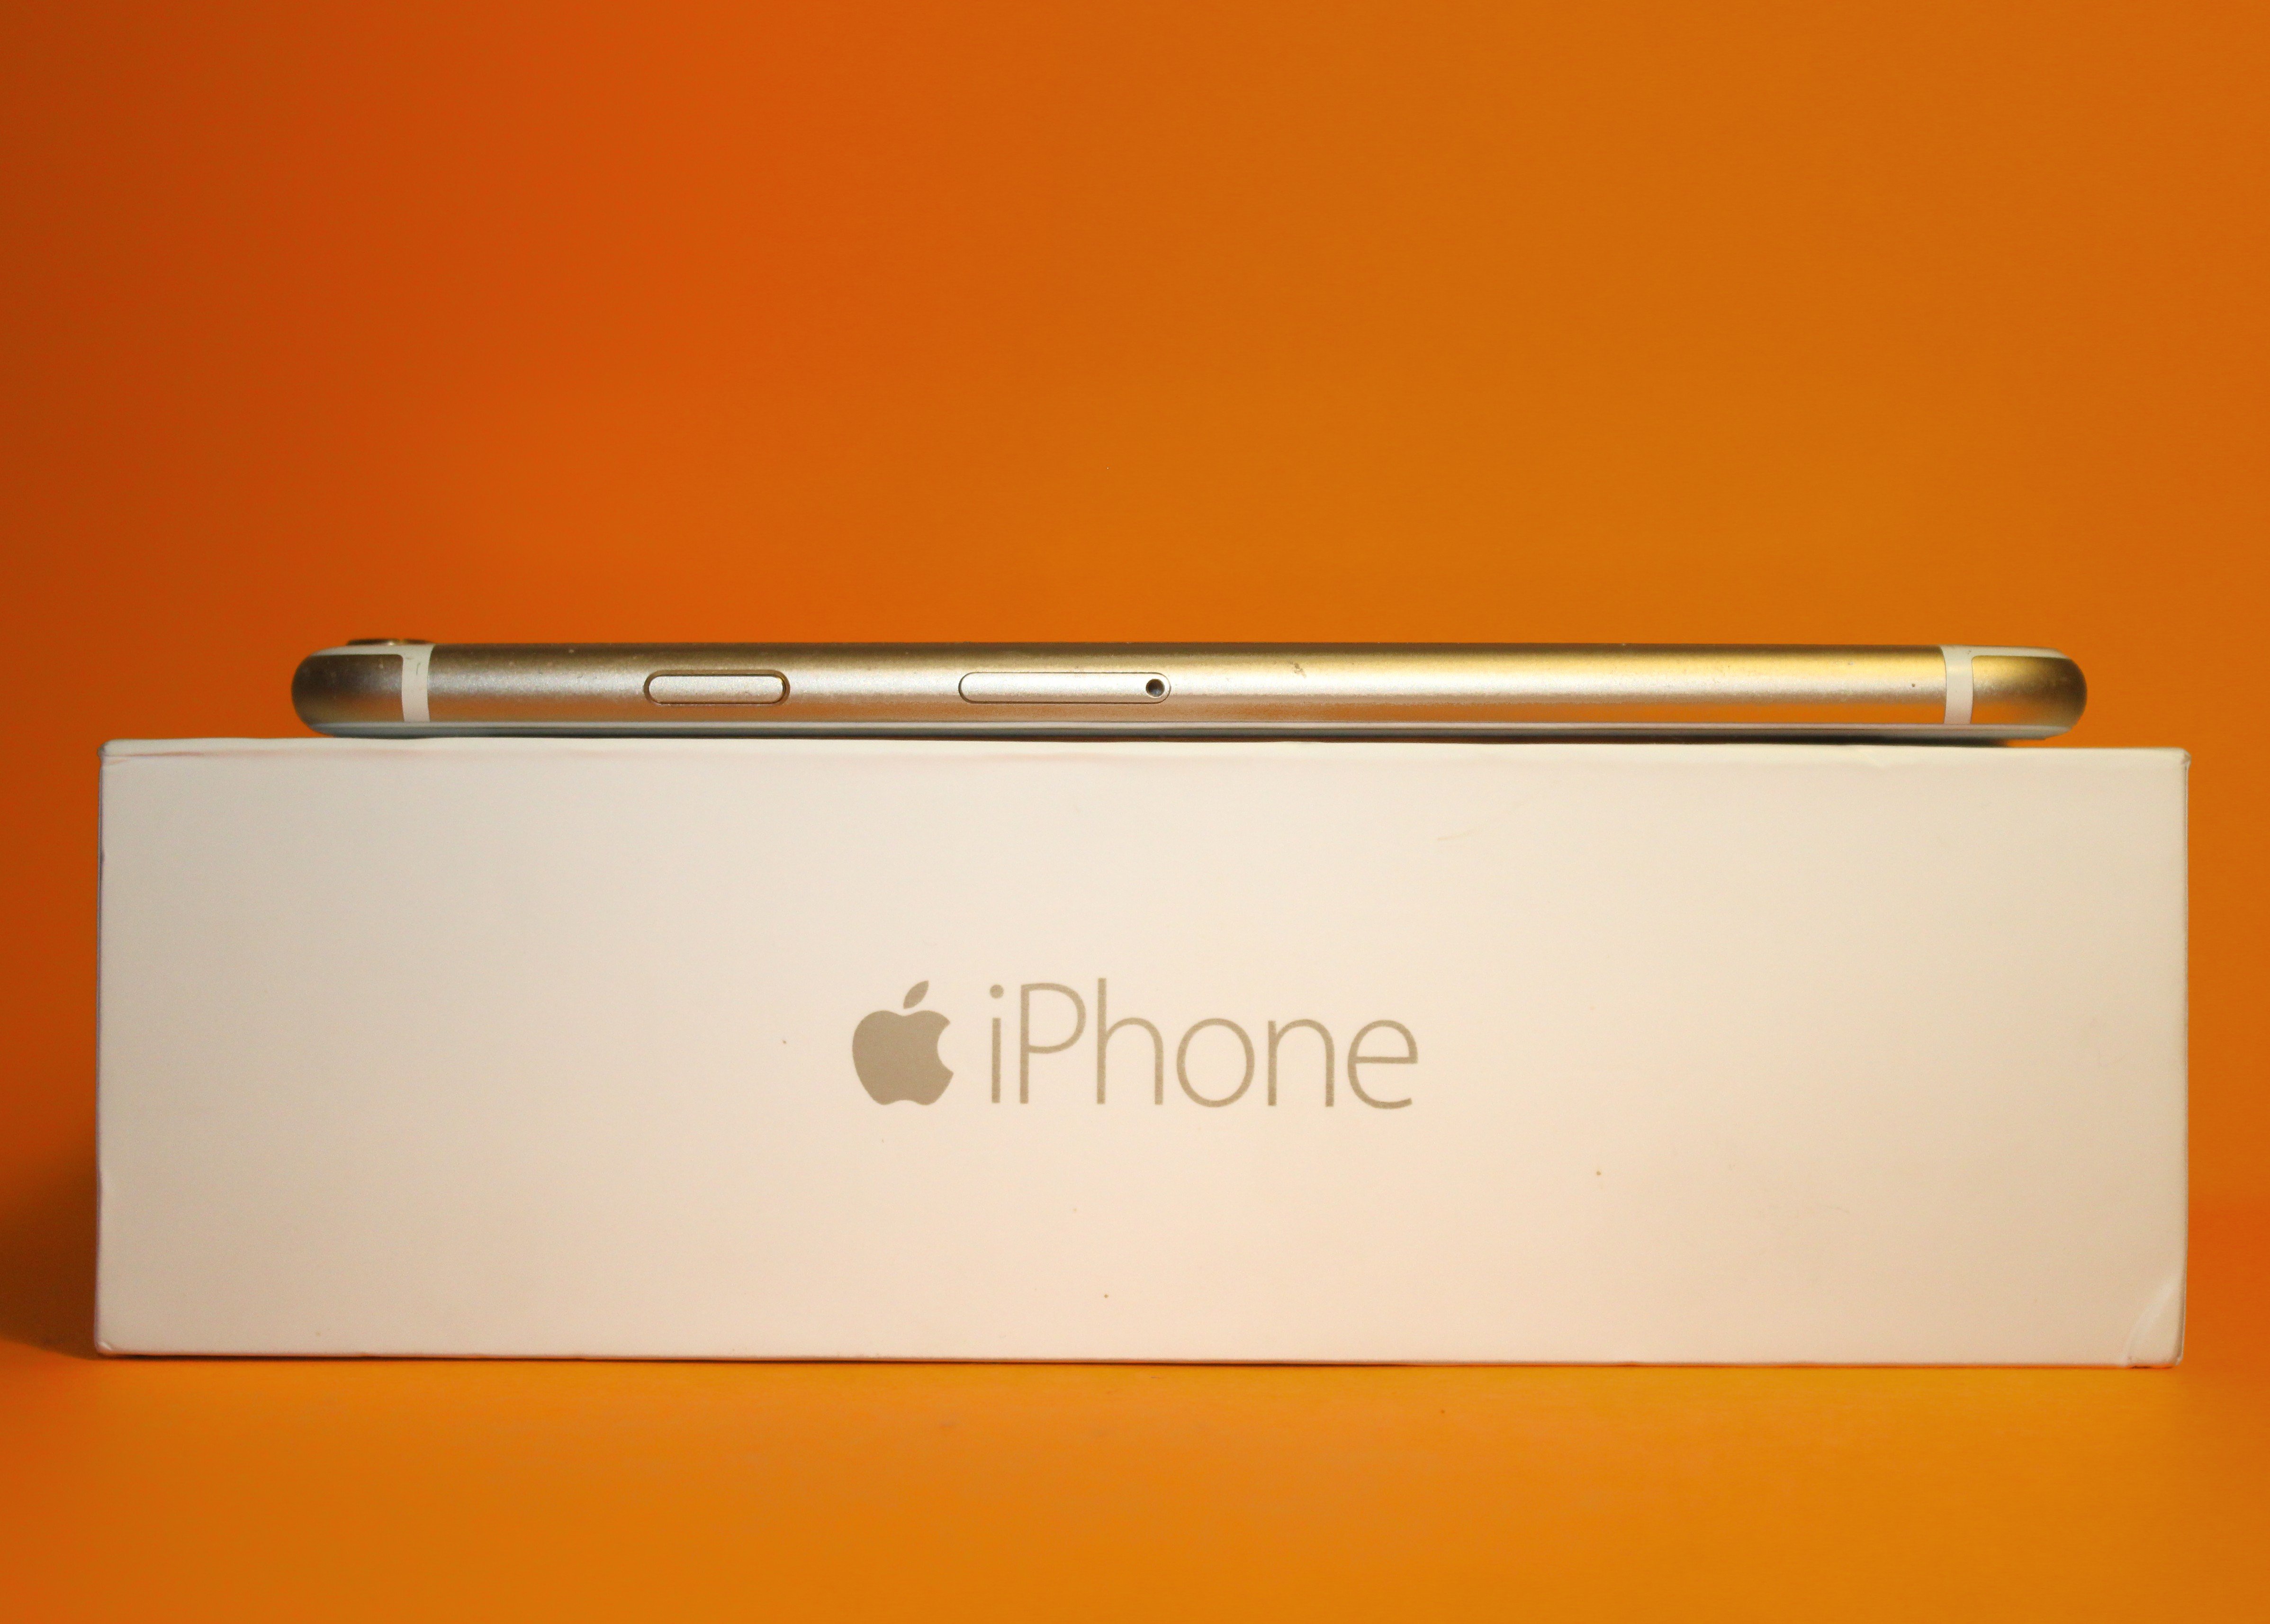 iPhone 6, IPhone, Orange, Smartphone, Phone Wallpaper